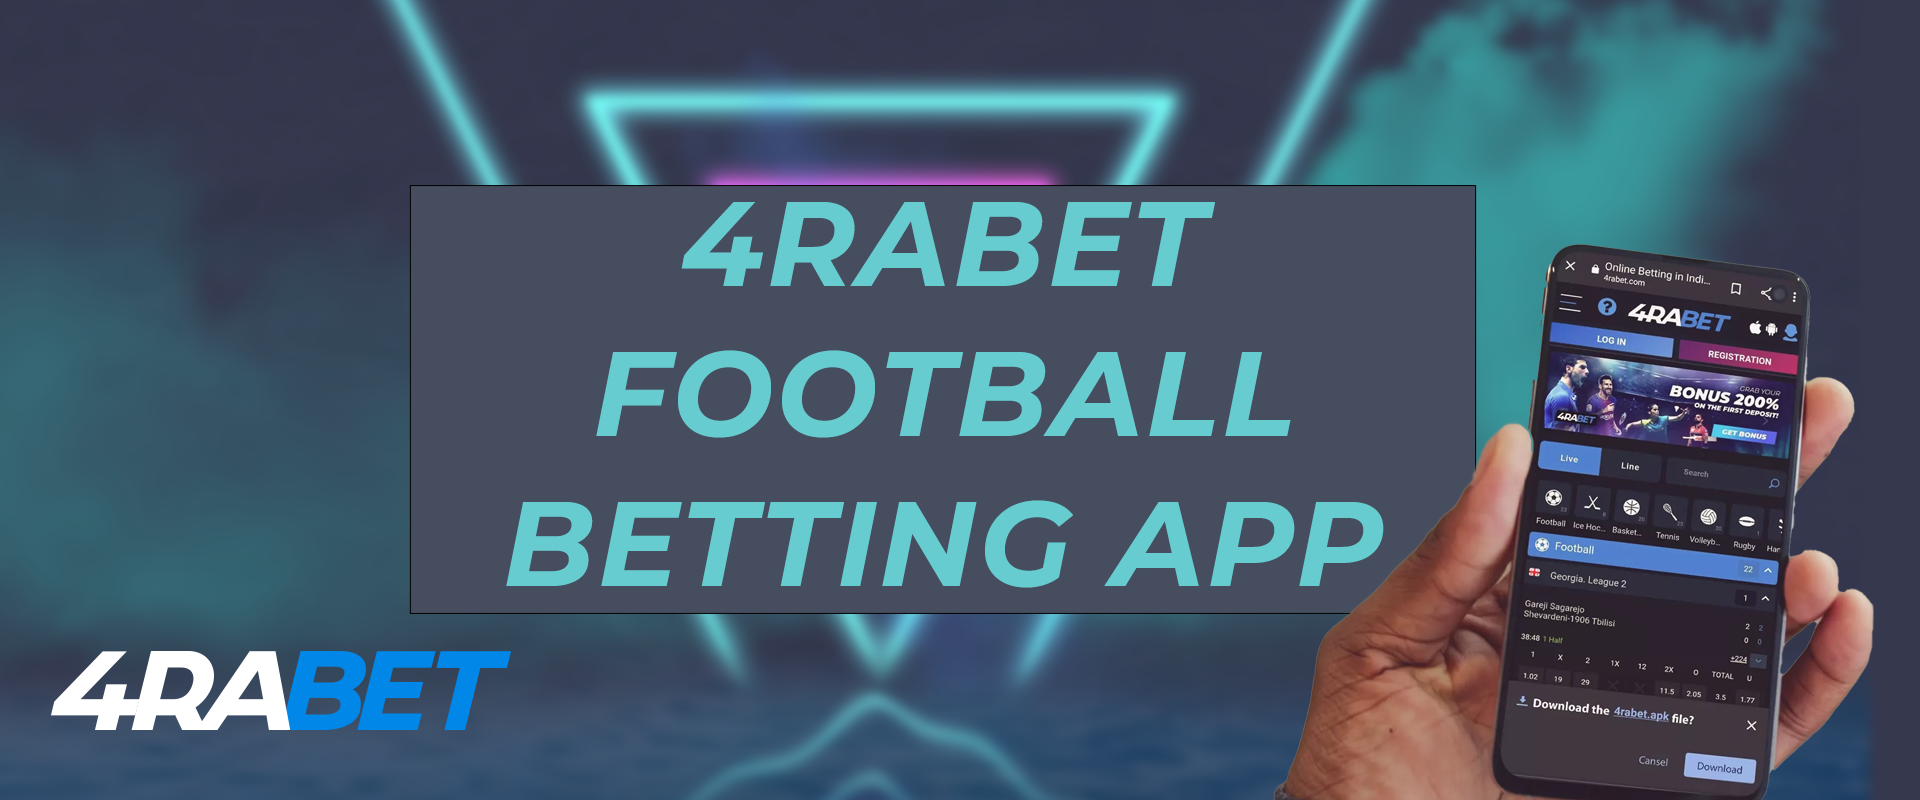 4rabet betting app.